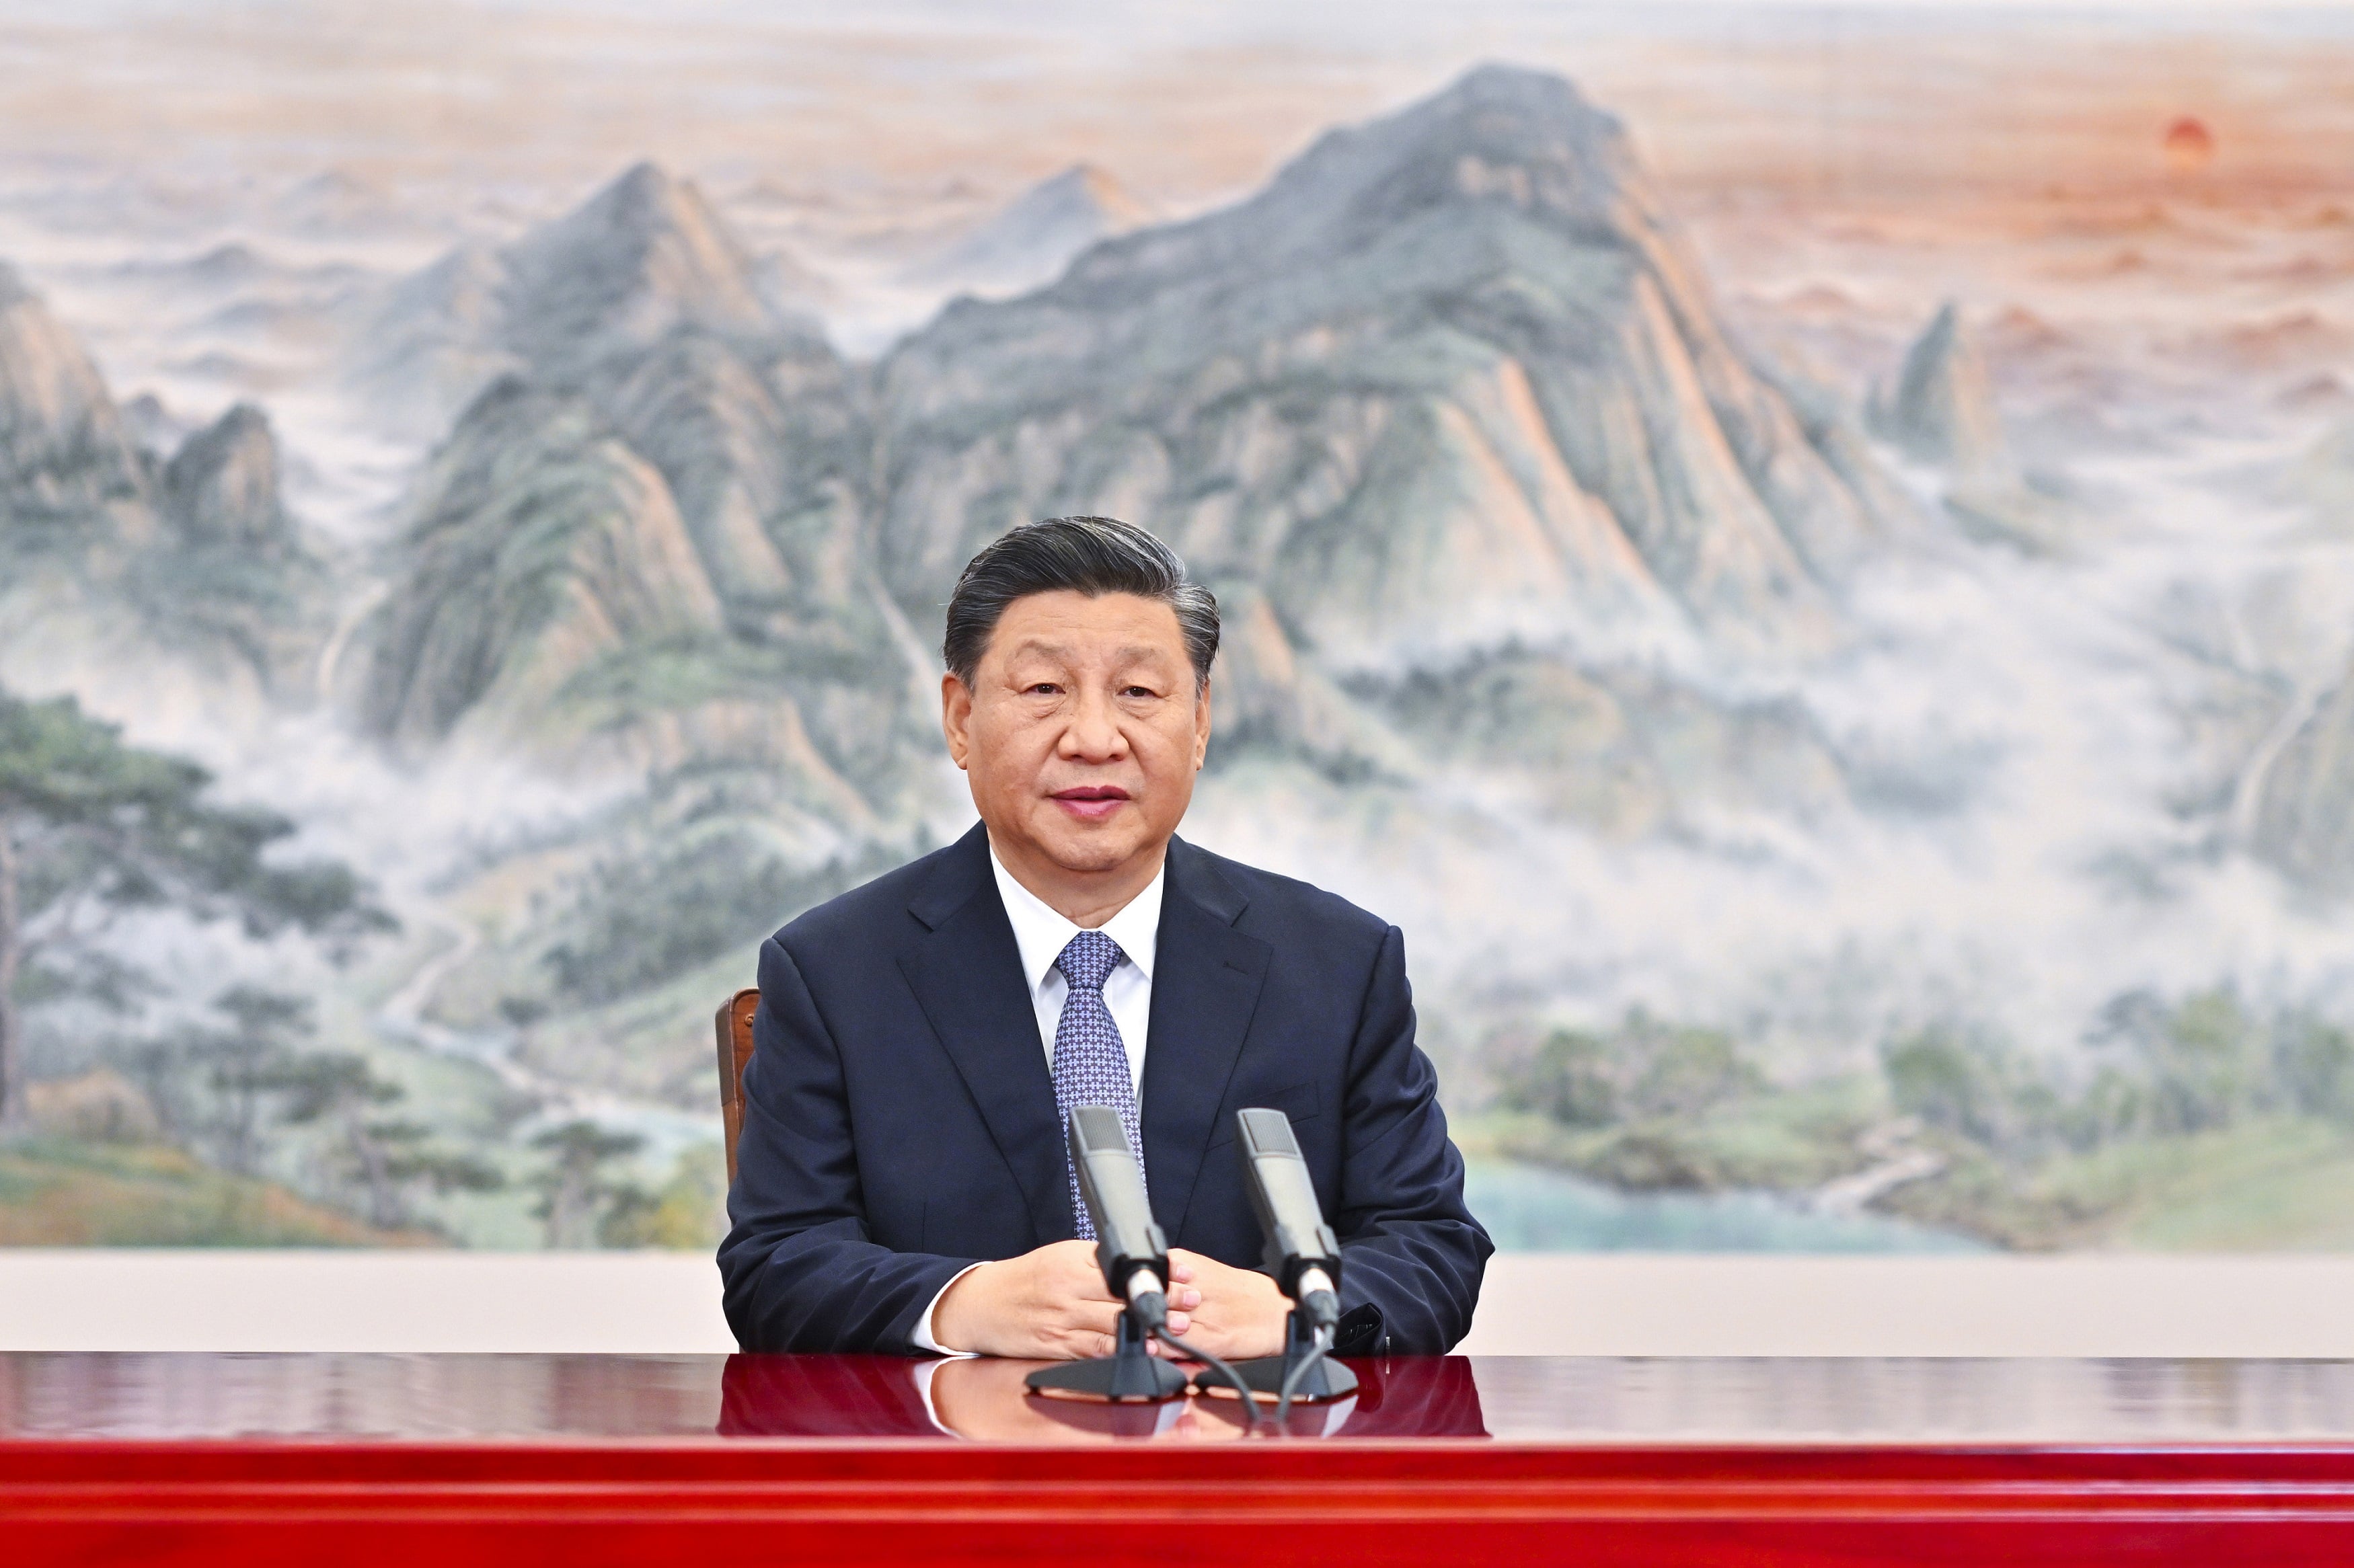 Xi Jinping to take on third term as leader